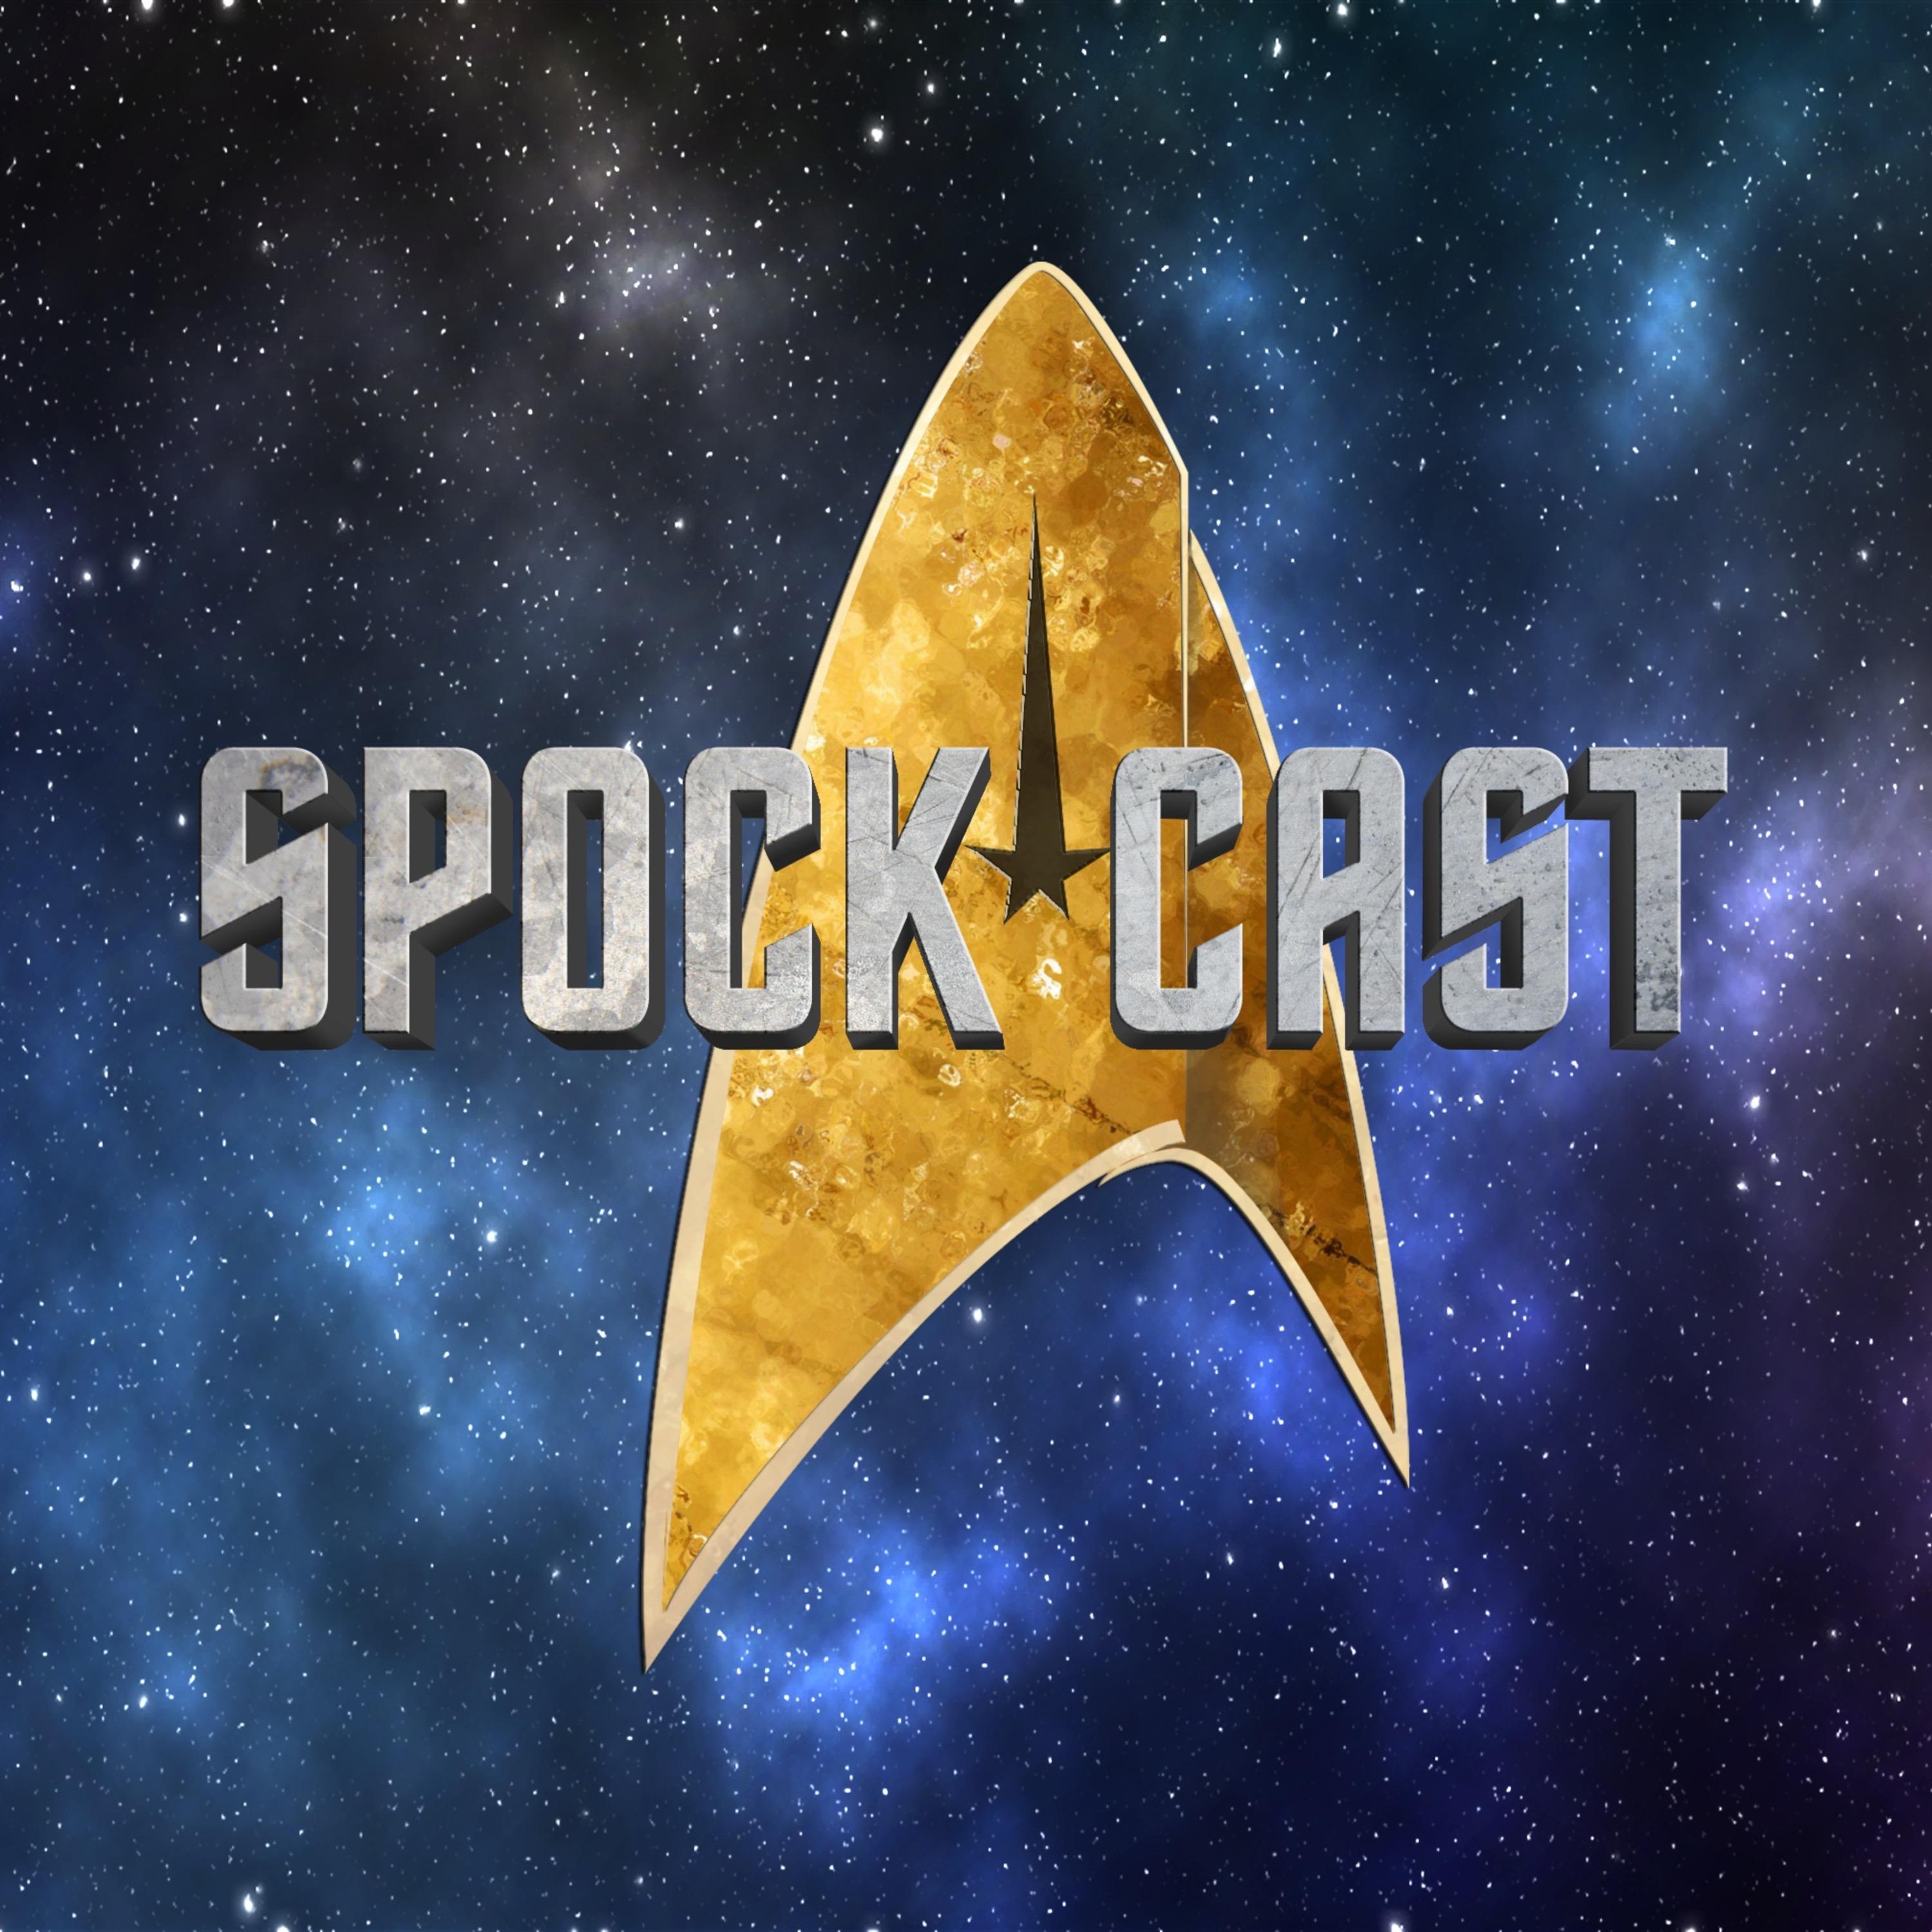 Spockcast - a Star Trek Picard, Strange New Worlds, Discovery, & Lower Decks podcast